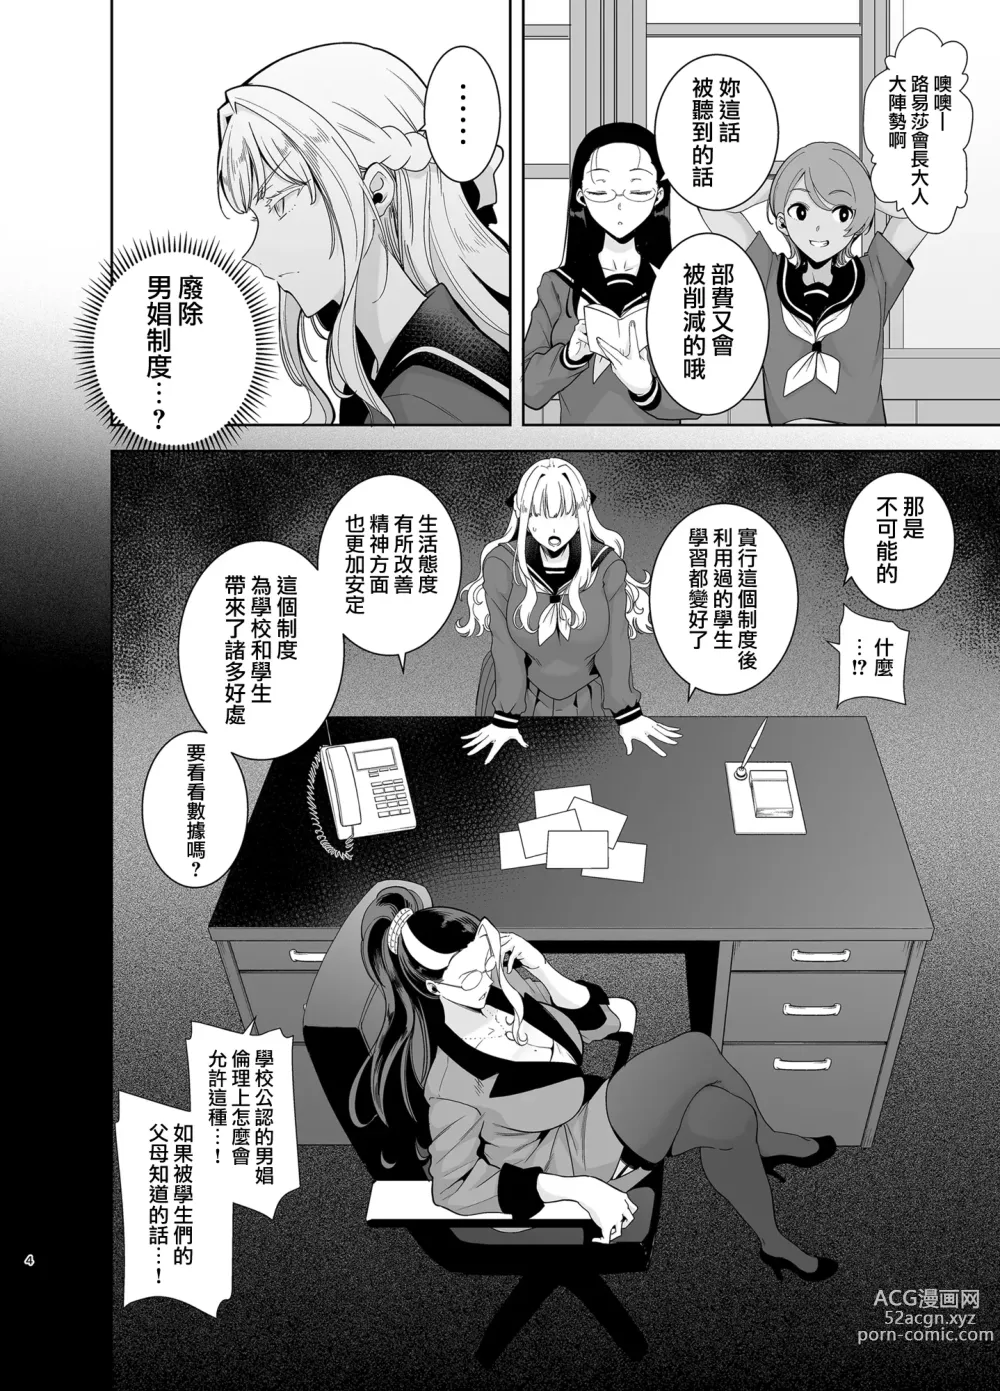 Page 4 of manga 聖華女学院高等部公認竿おじさん 4